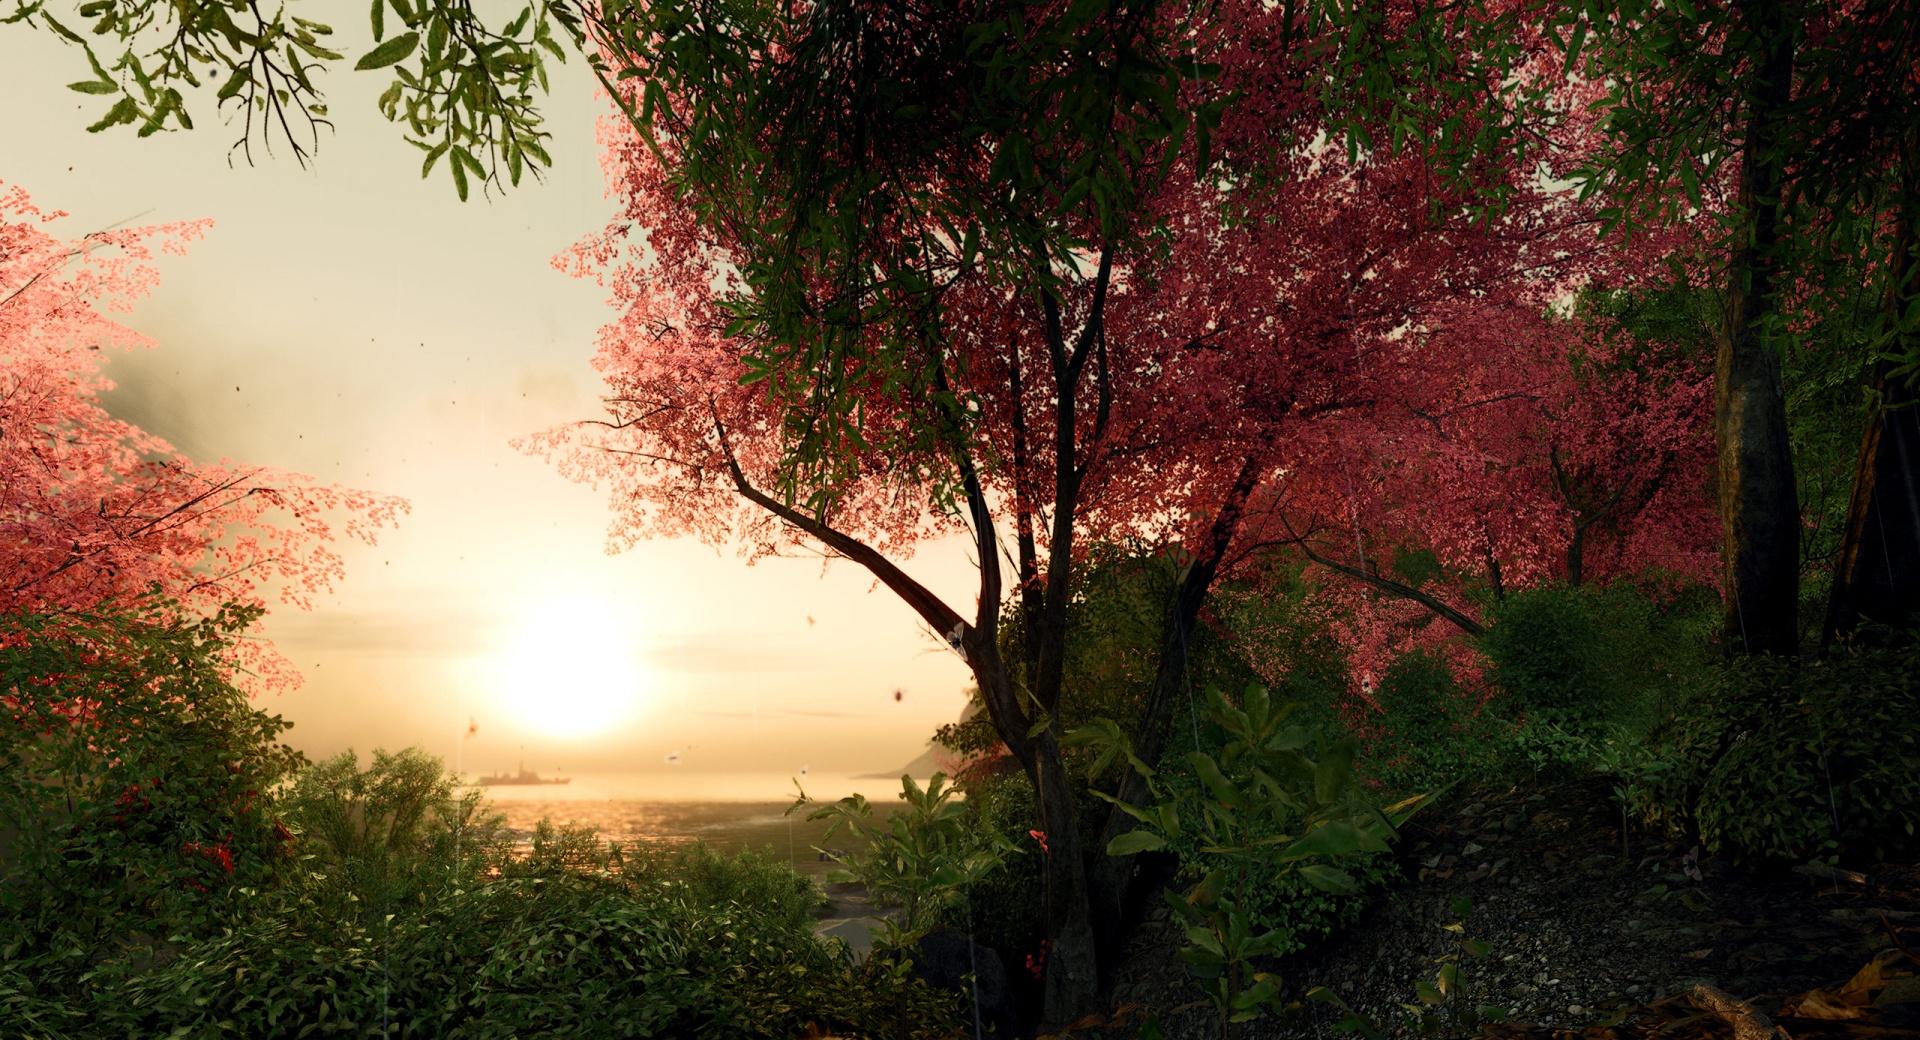 Crysis Video Game Sakura at 1024 x 768 size wallpapers HD quality